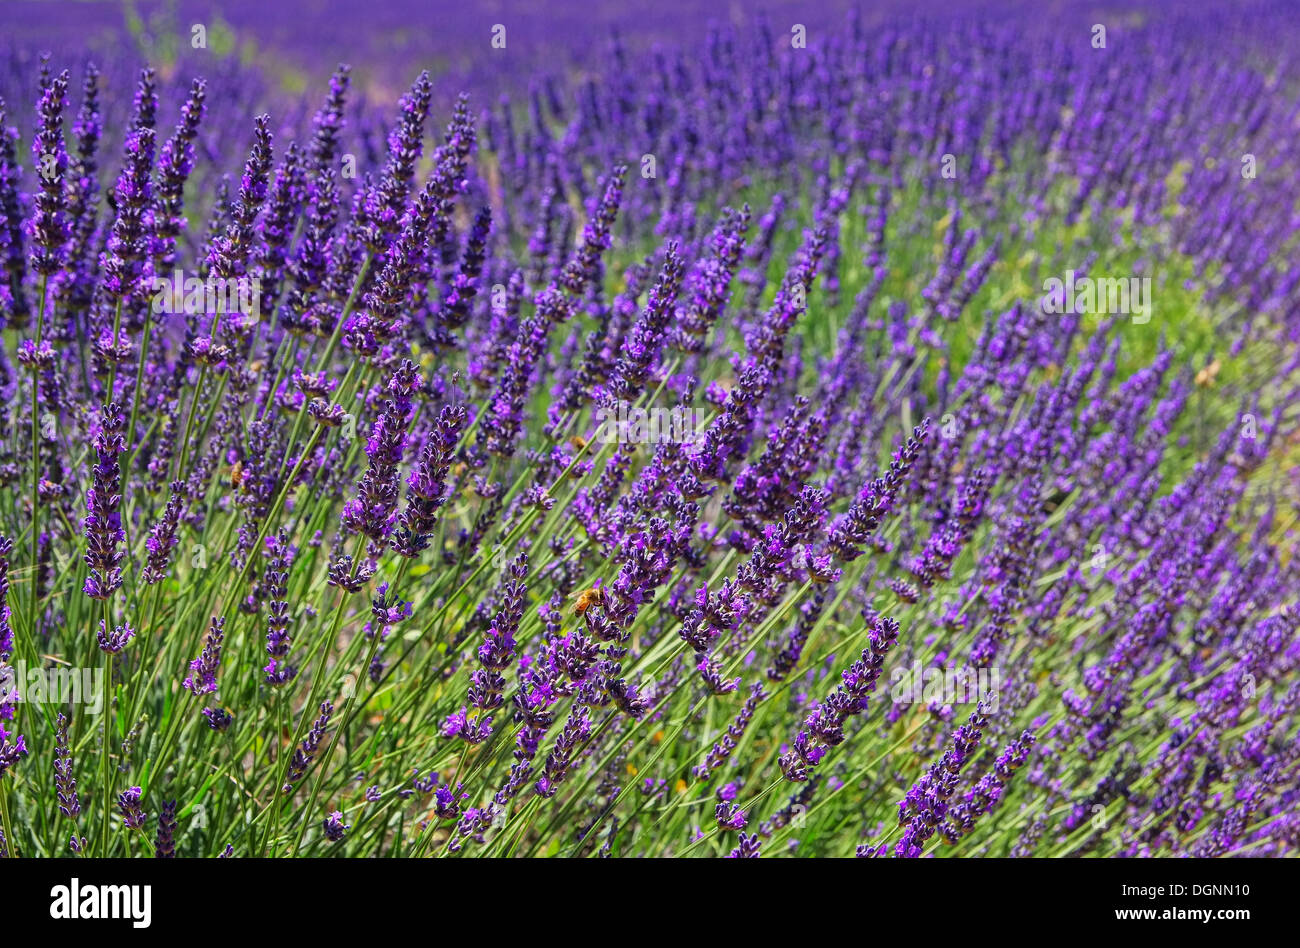 Lavendelfeld - lavender field 05 Stock Photo